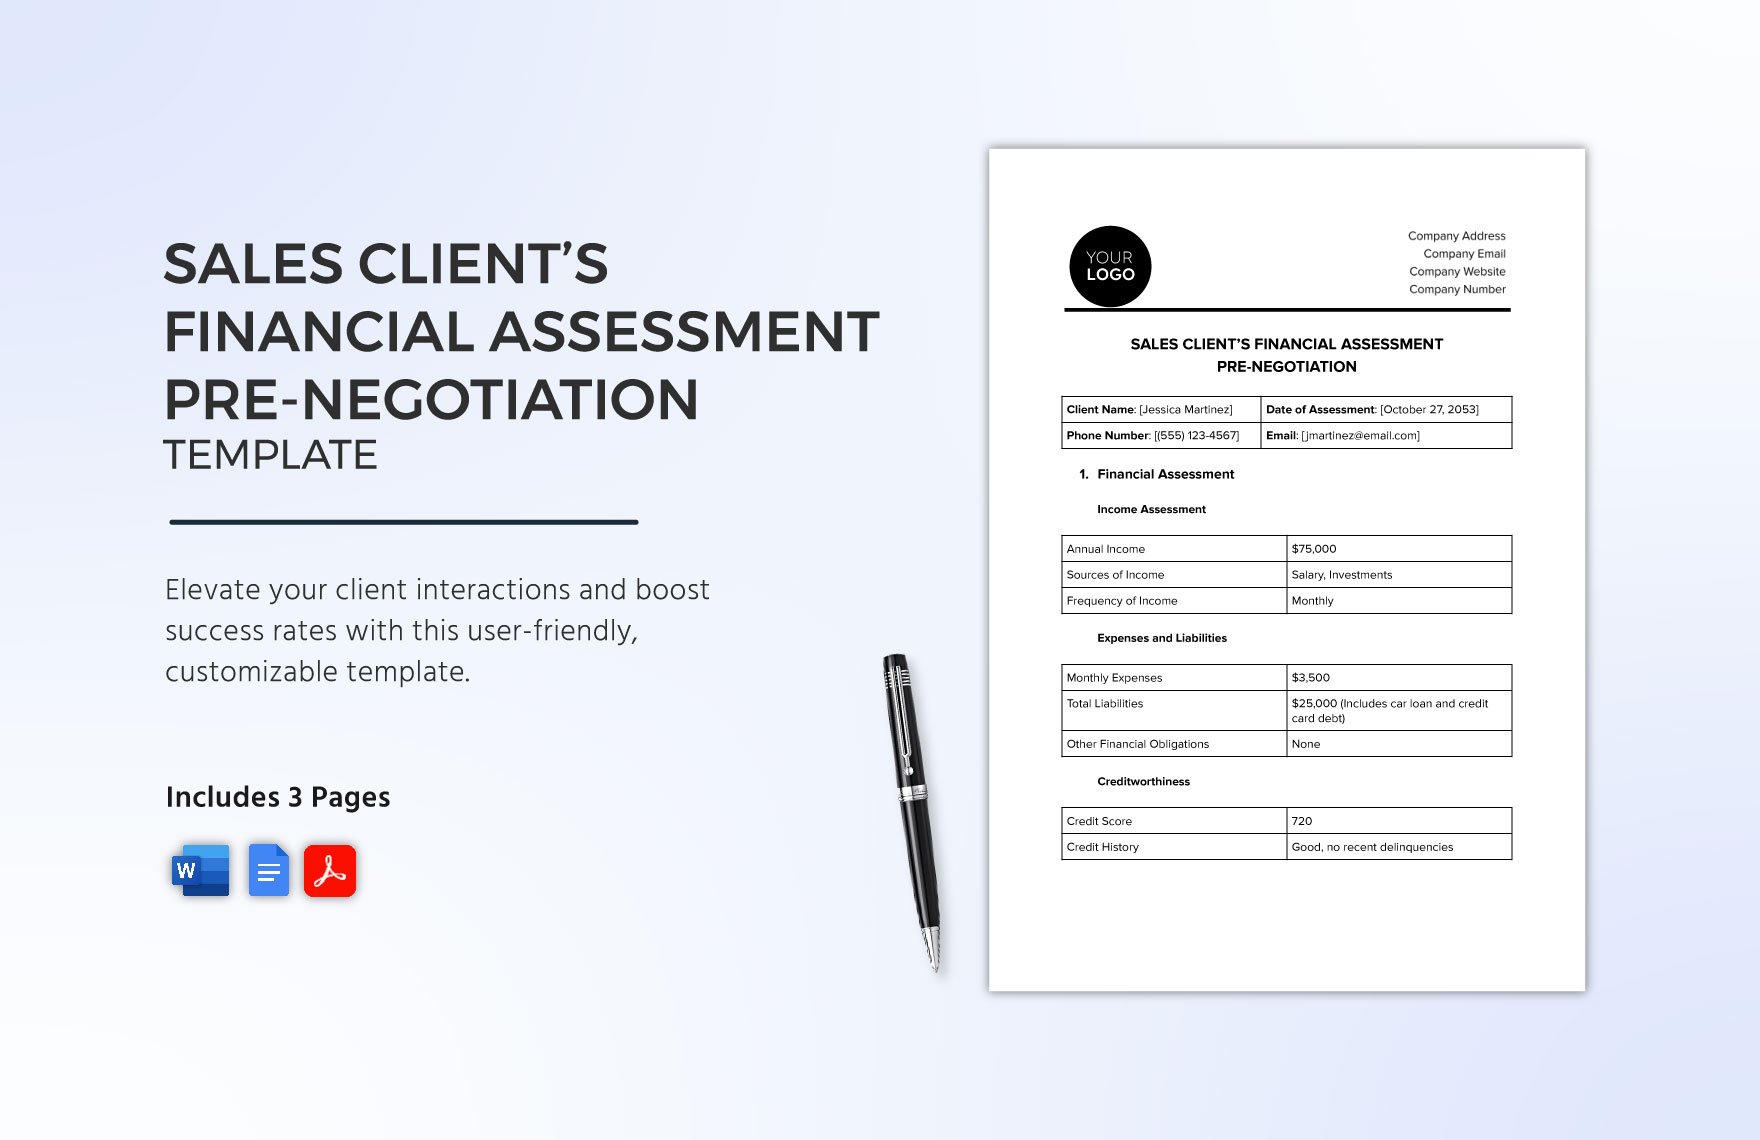 Sales Client's Financial Assessment Pre-Negotiation Template